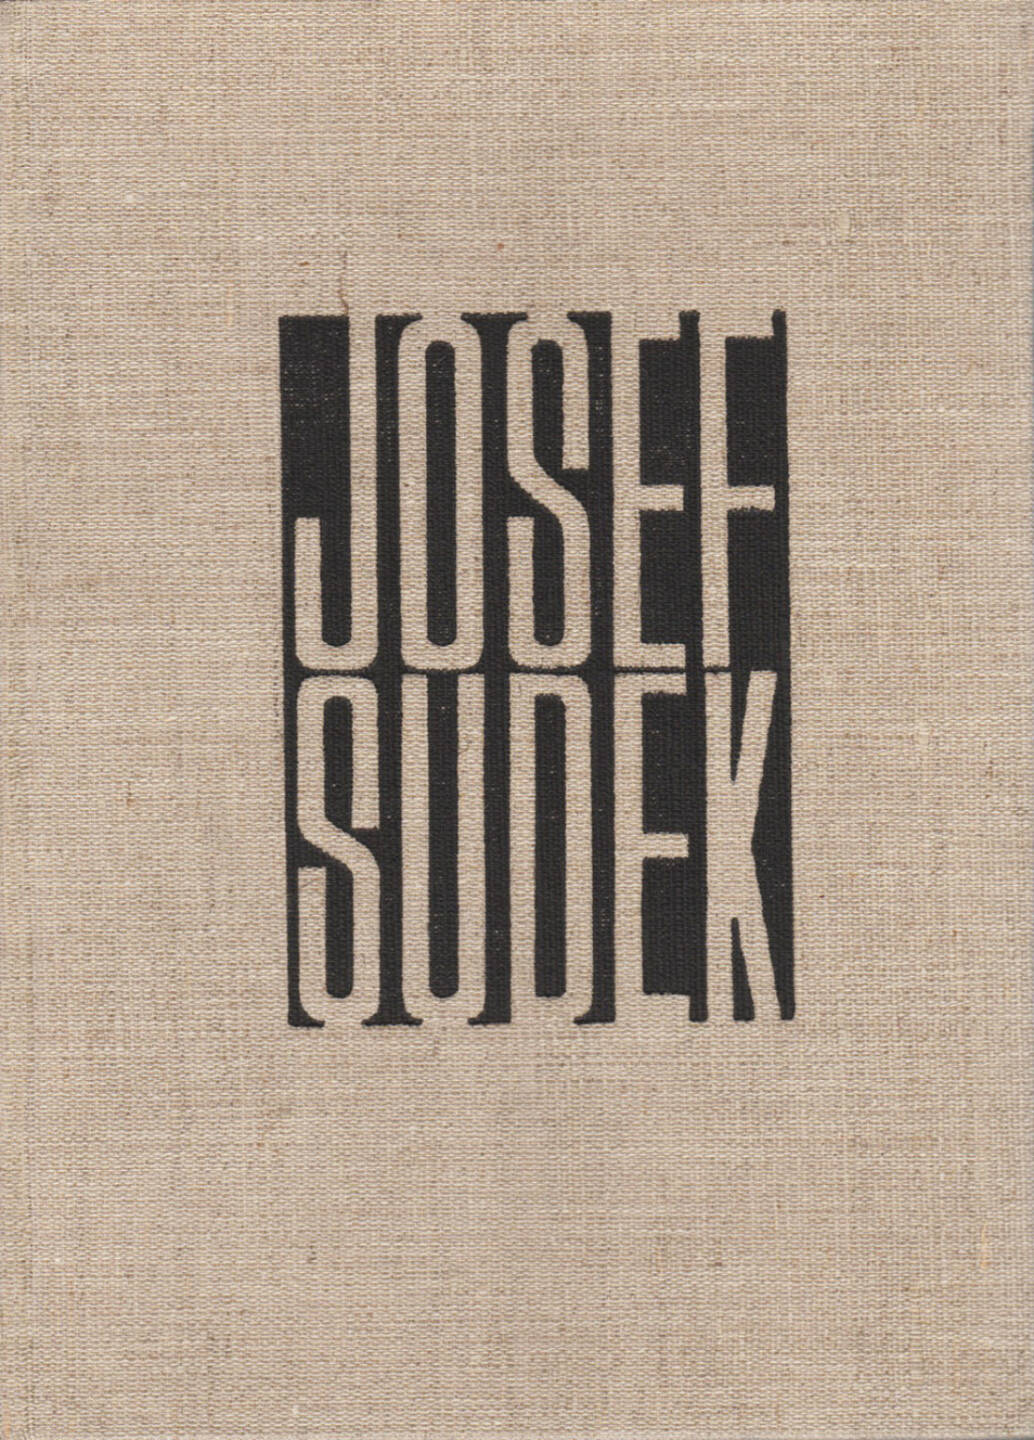 Josef Sudek - Fotografie, Statni Nakladatelstvi Krasne Literaturi 1956, Cover - http://josefchladek.com/book/josef_sudek_-_fotografie